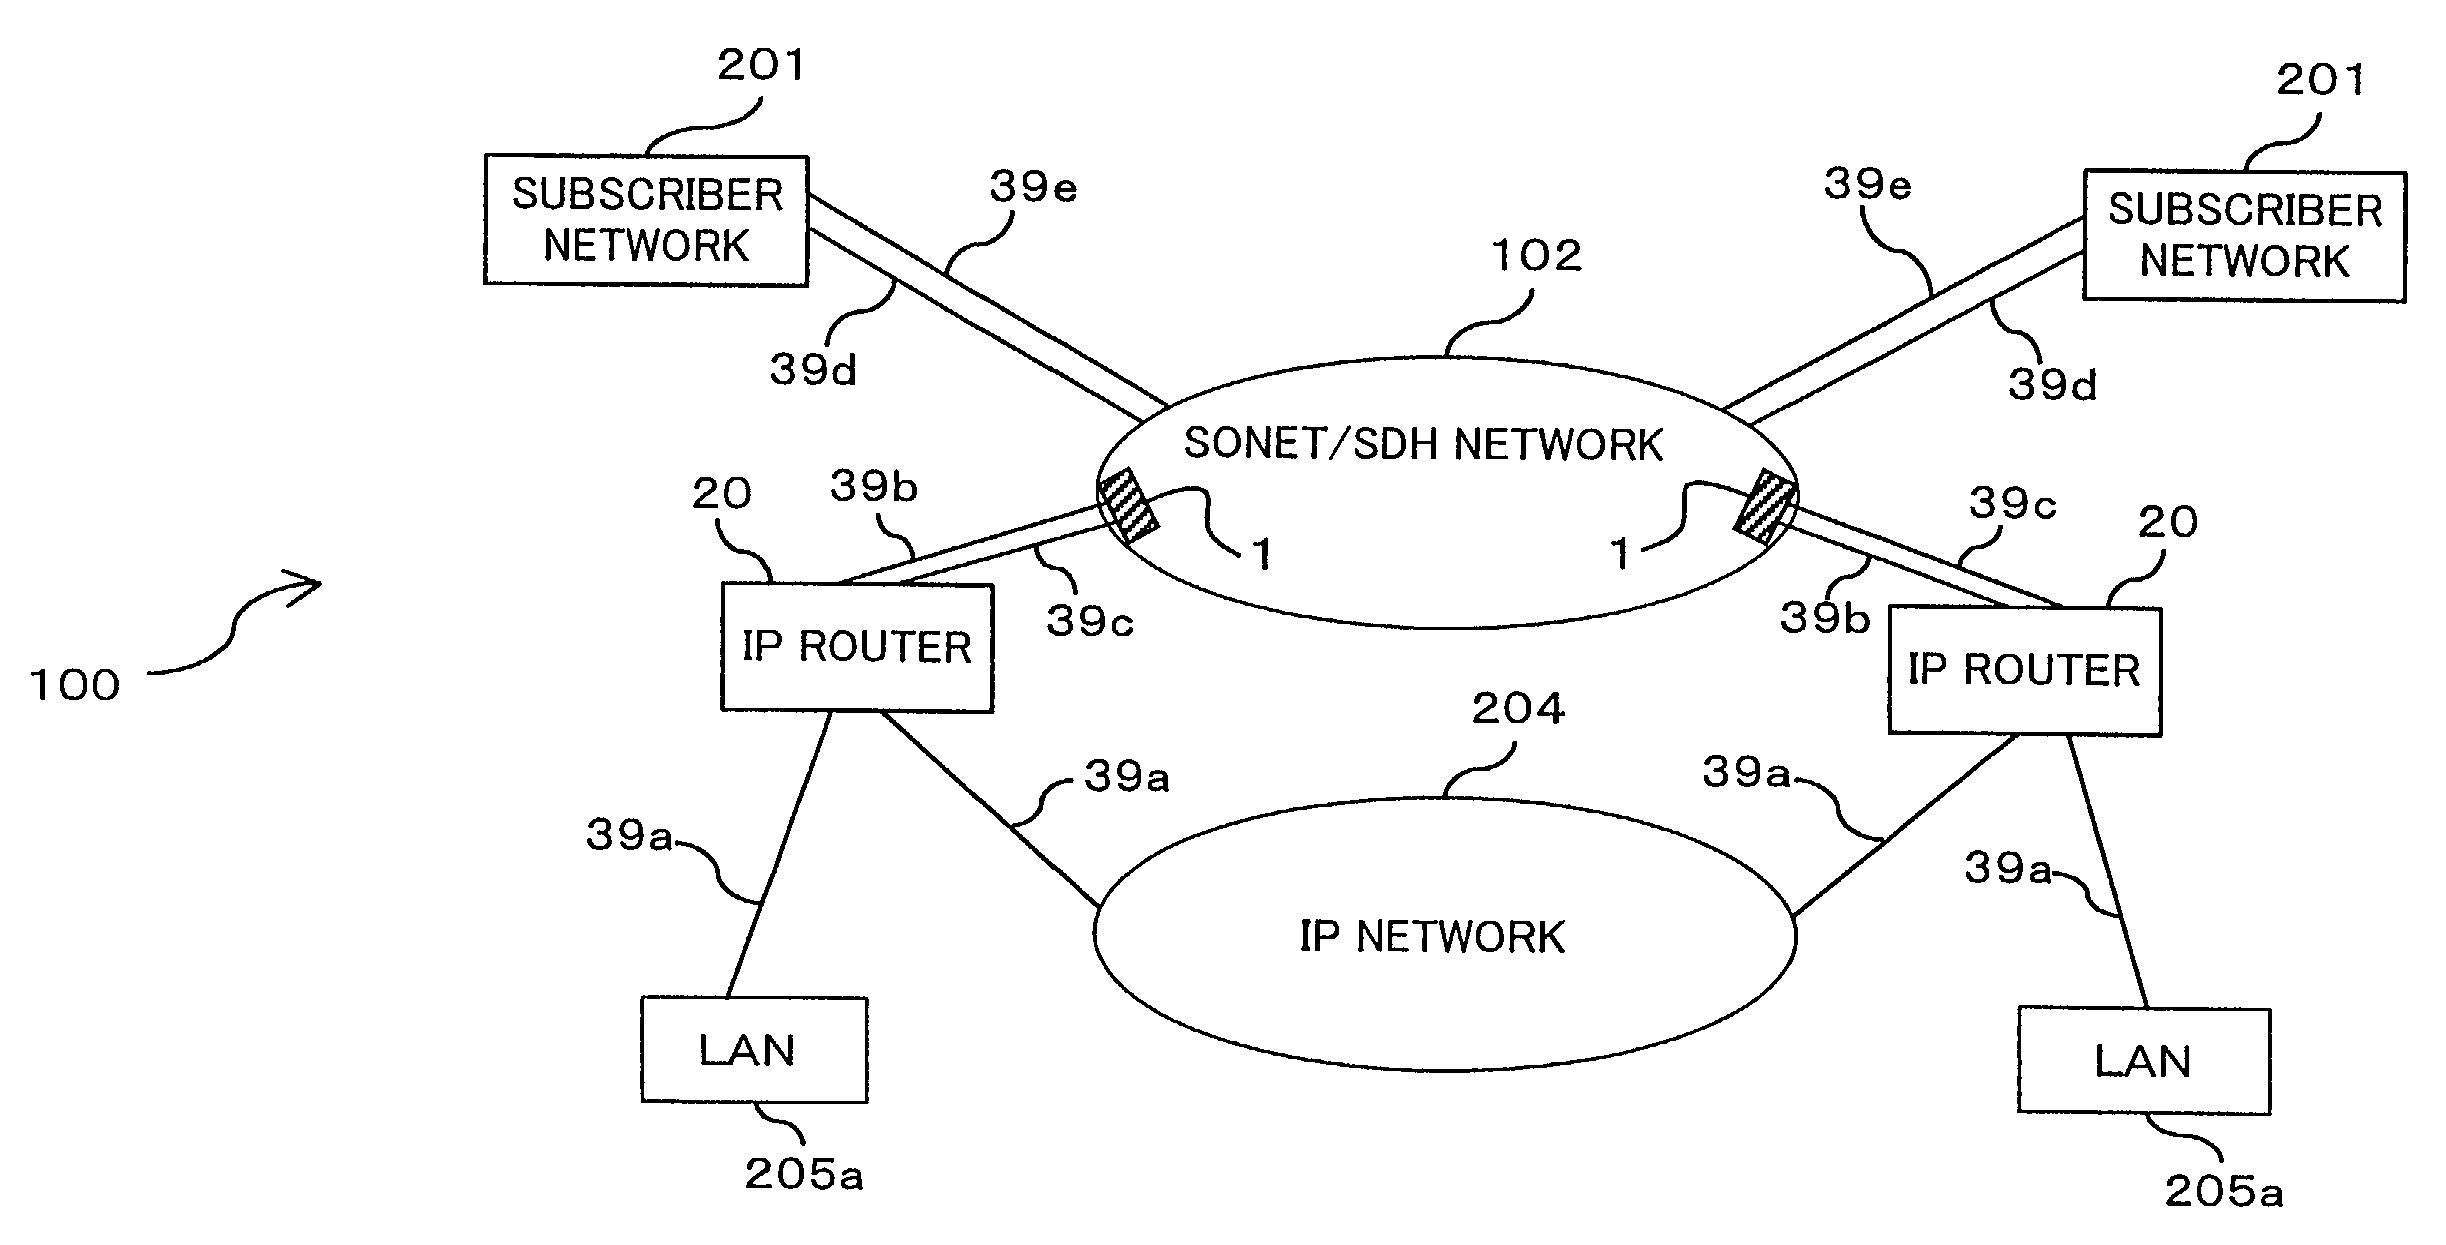 Transmitter, SONET/SDH transmitter, and transmission system